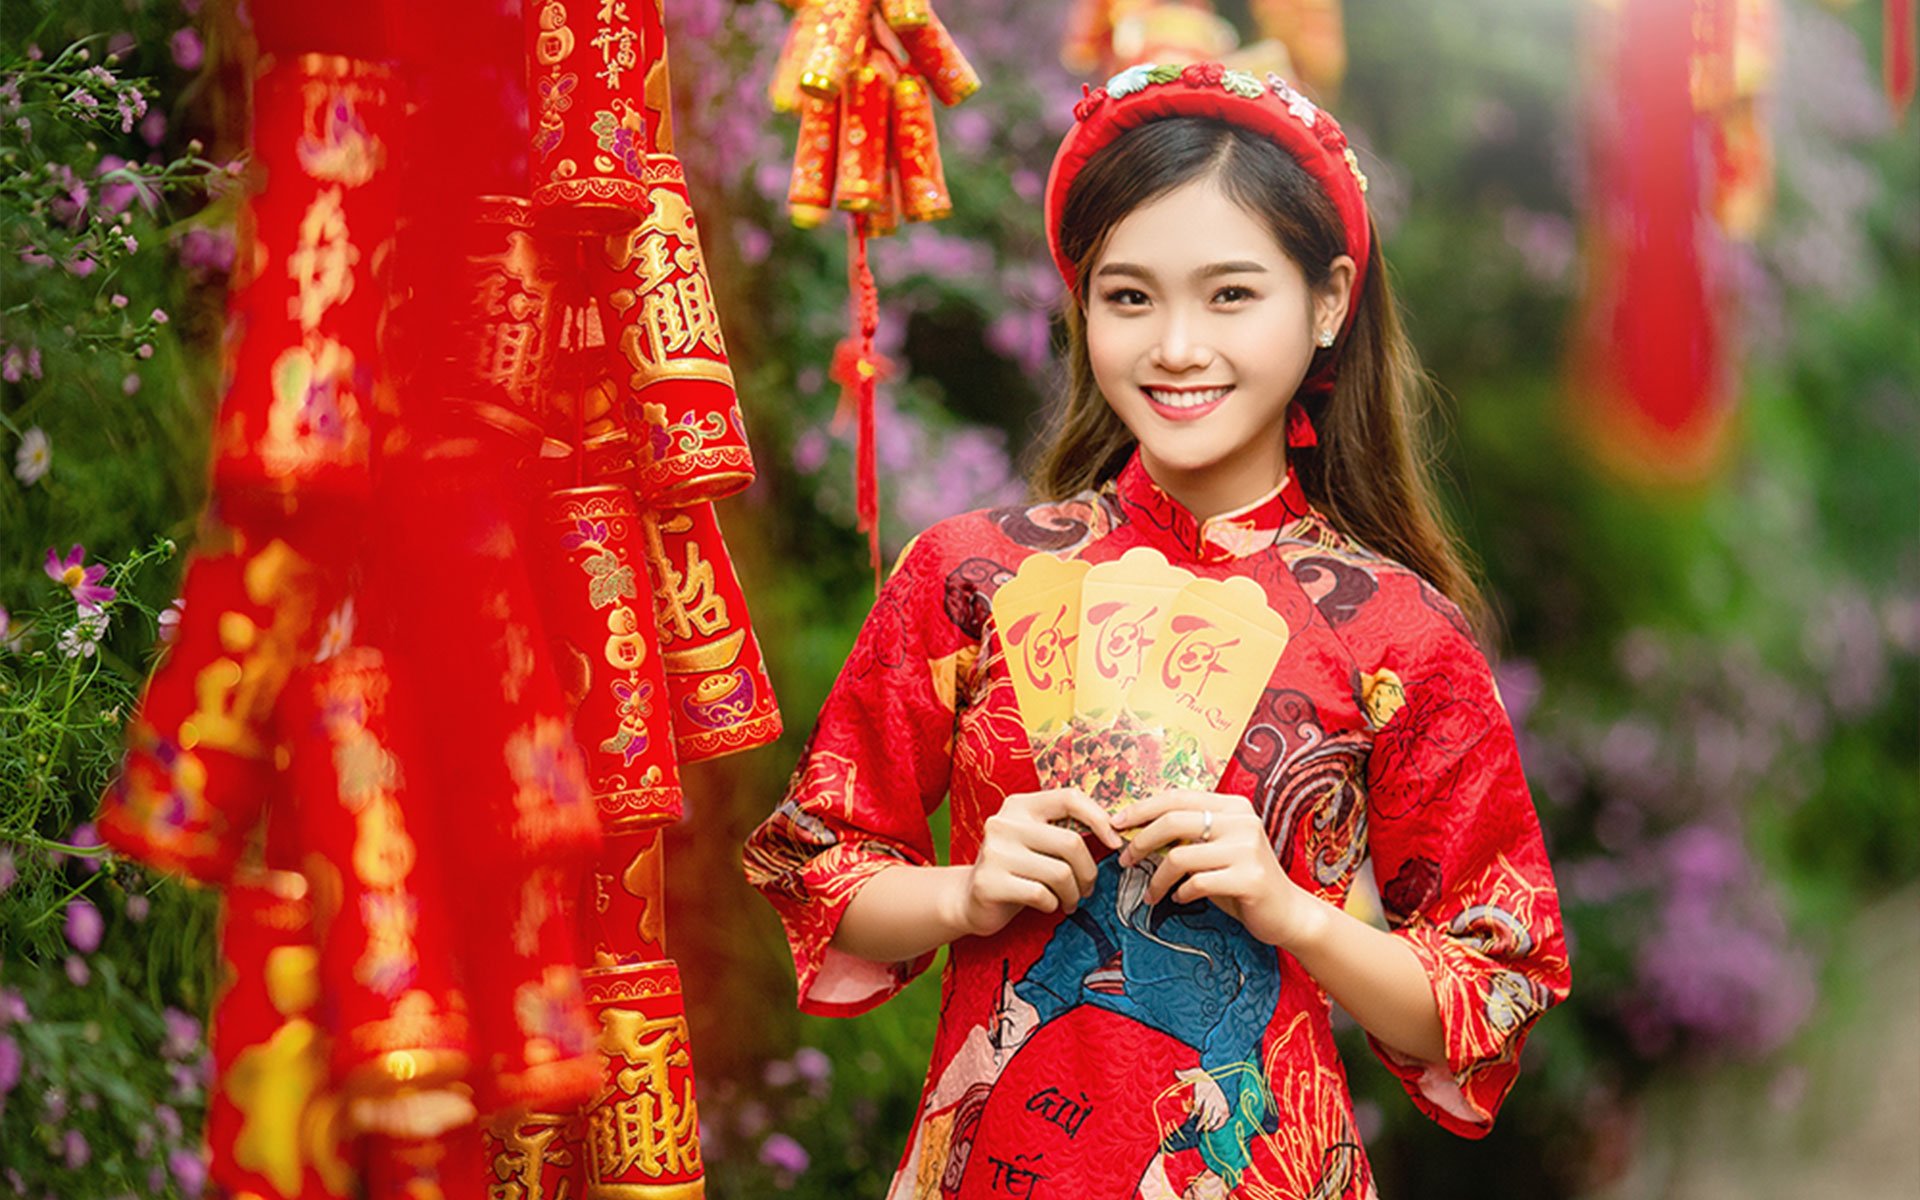 Li Xi Or Lucky Money In Vietnamese Culture